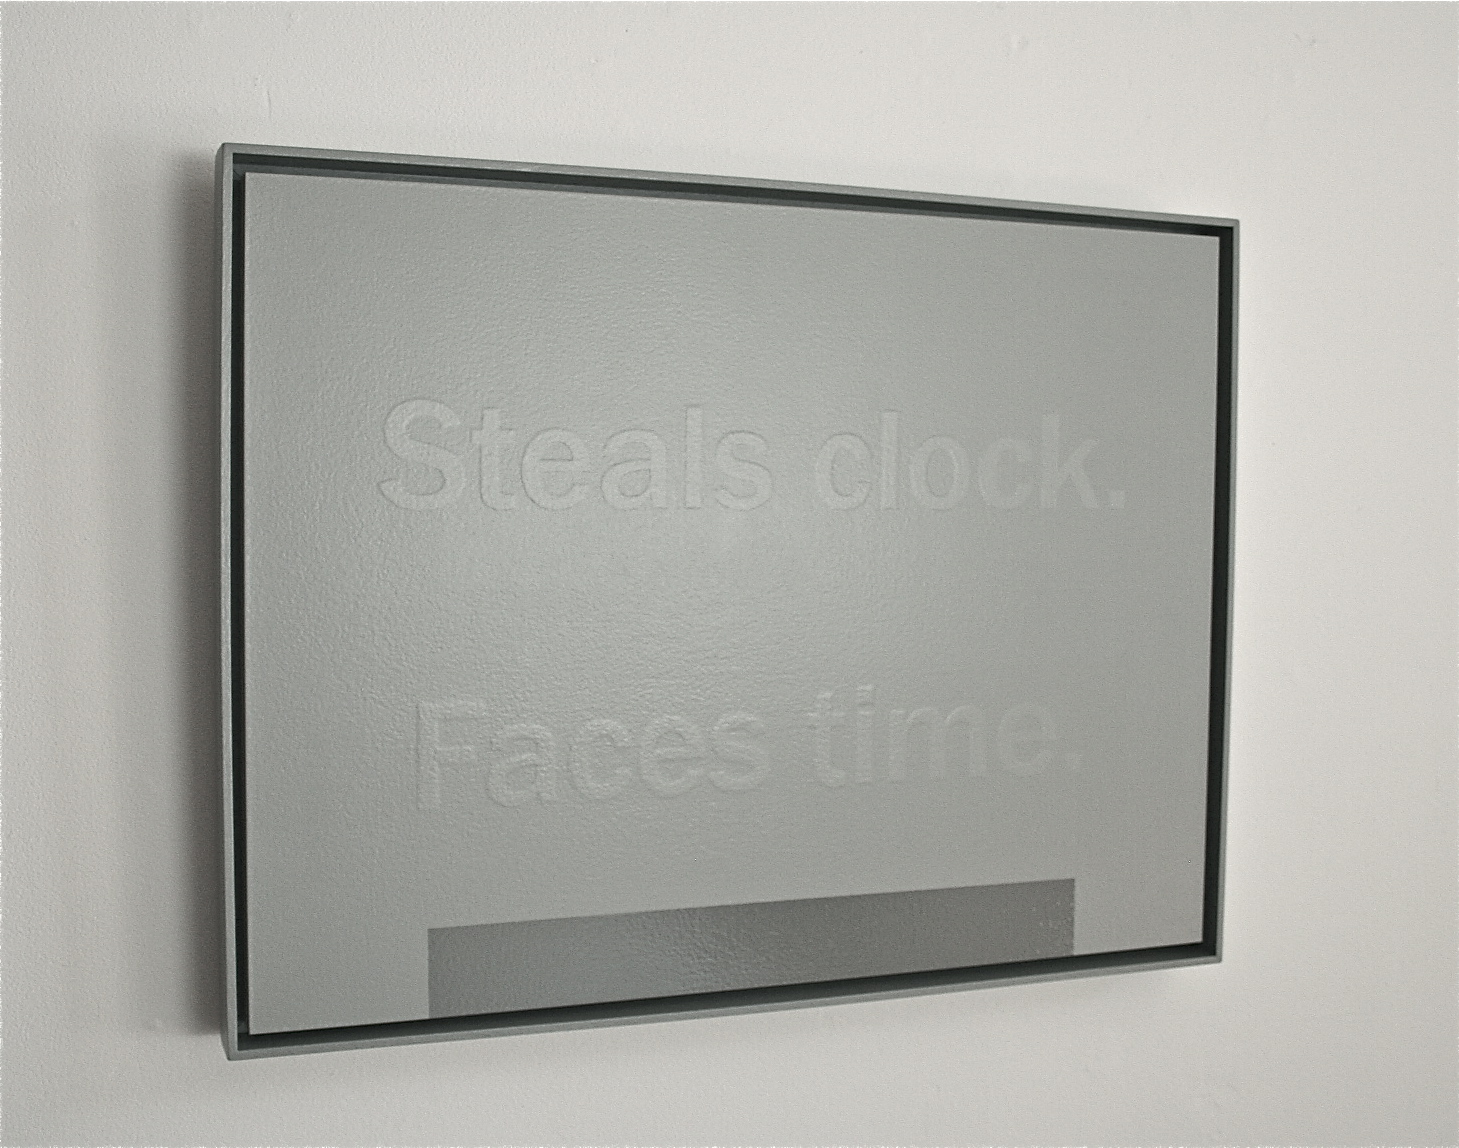 Patrick DeGuira, Steals Clock. Faces Time 2012